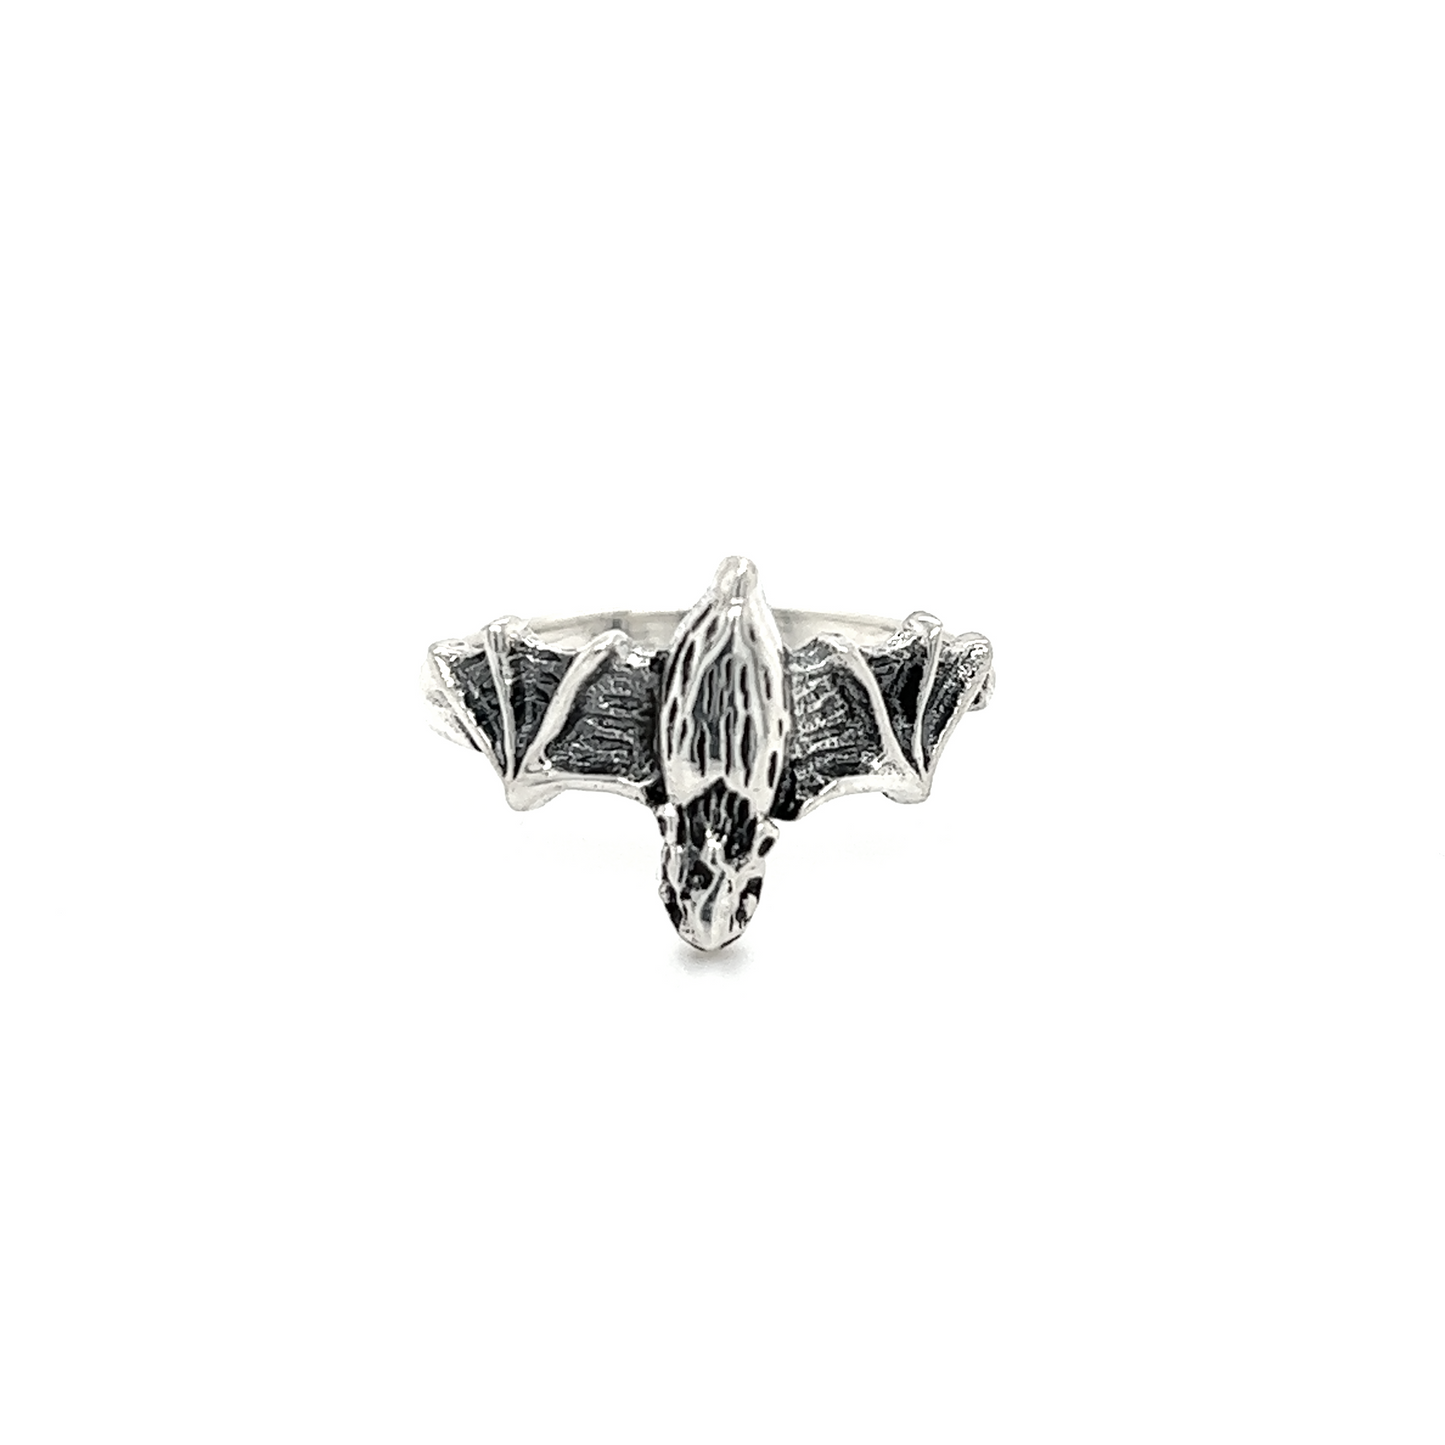 An enchanting Super Silver Silver Bat Ring with a transformative design.